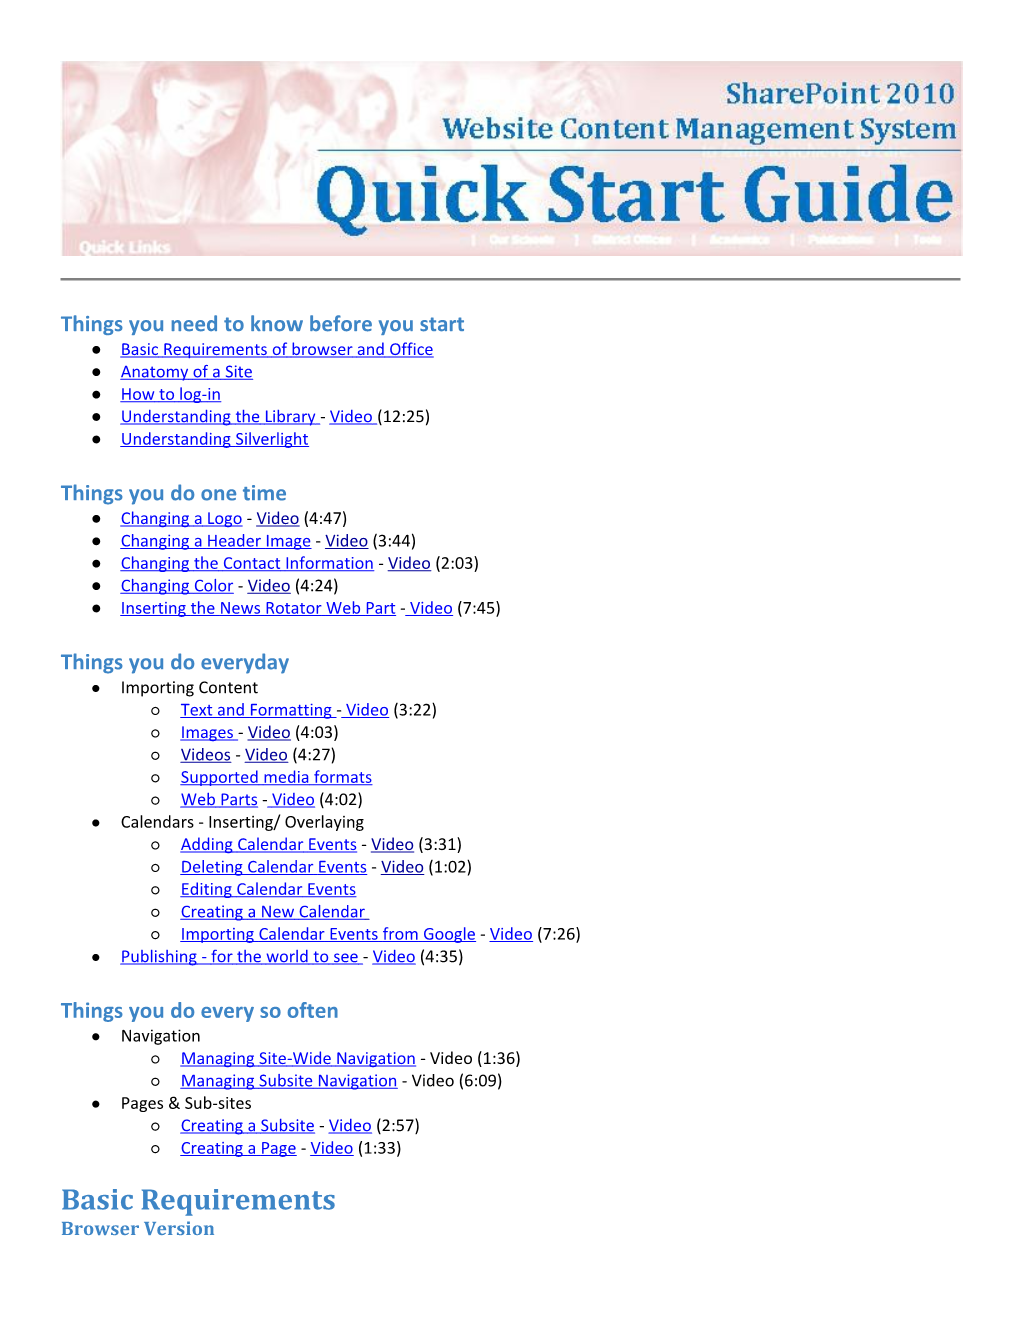 Quick Start Guide for School Websites